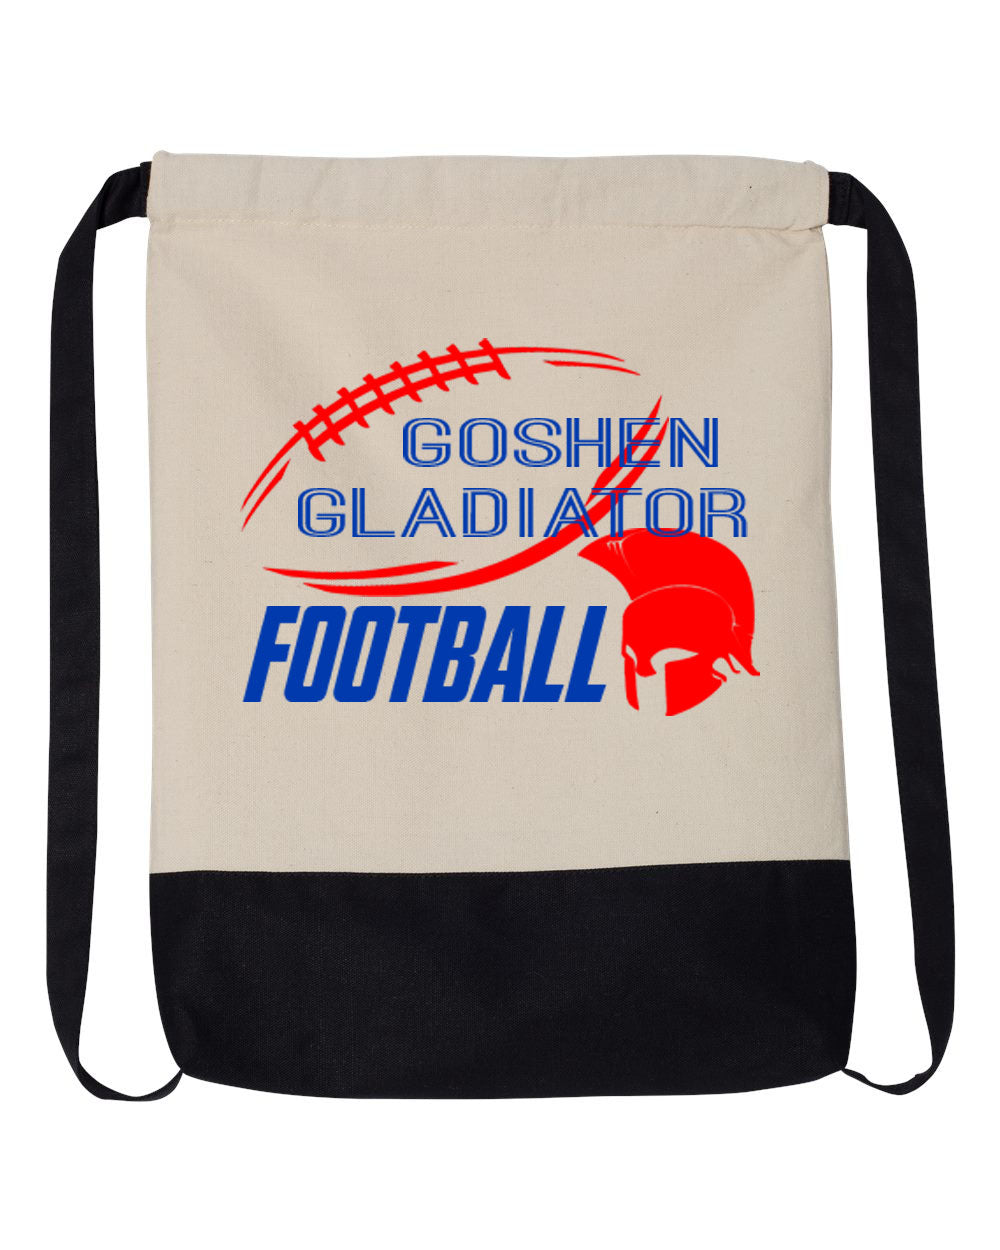 Goshen Football design 6 Drawstring Bag